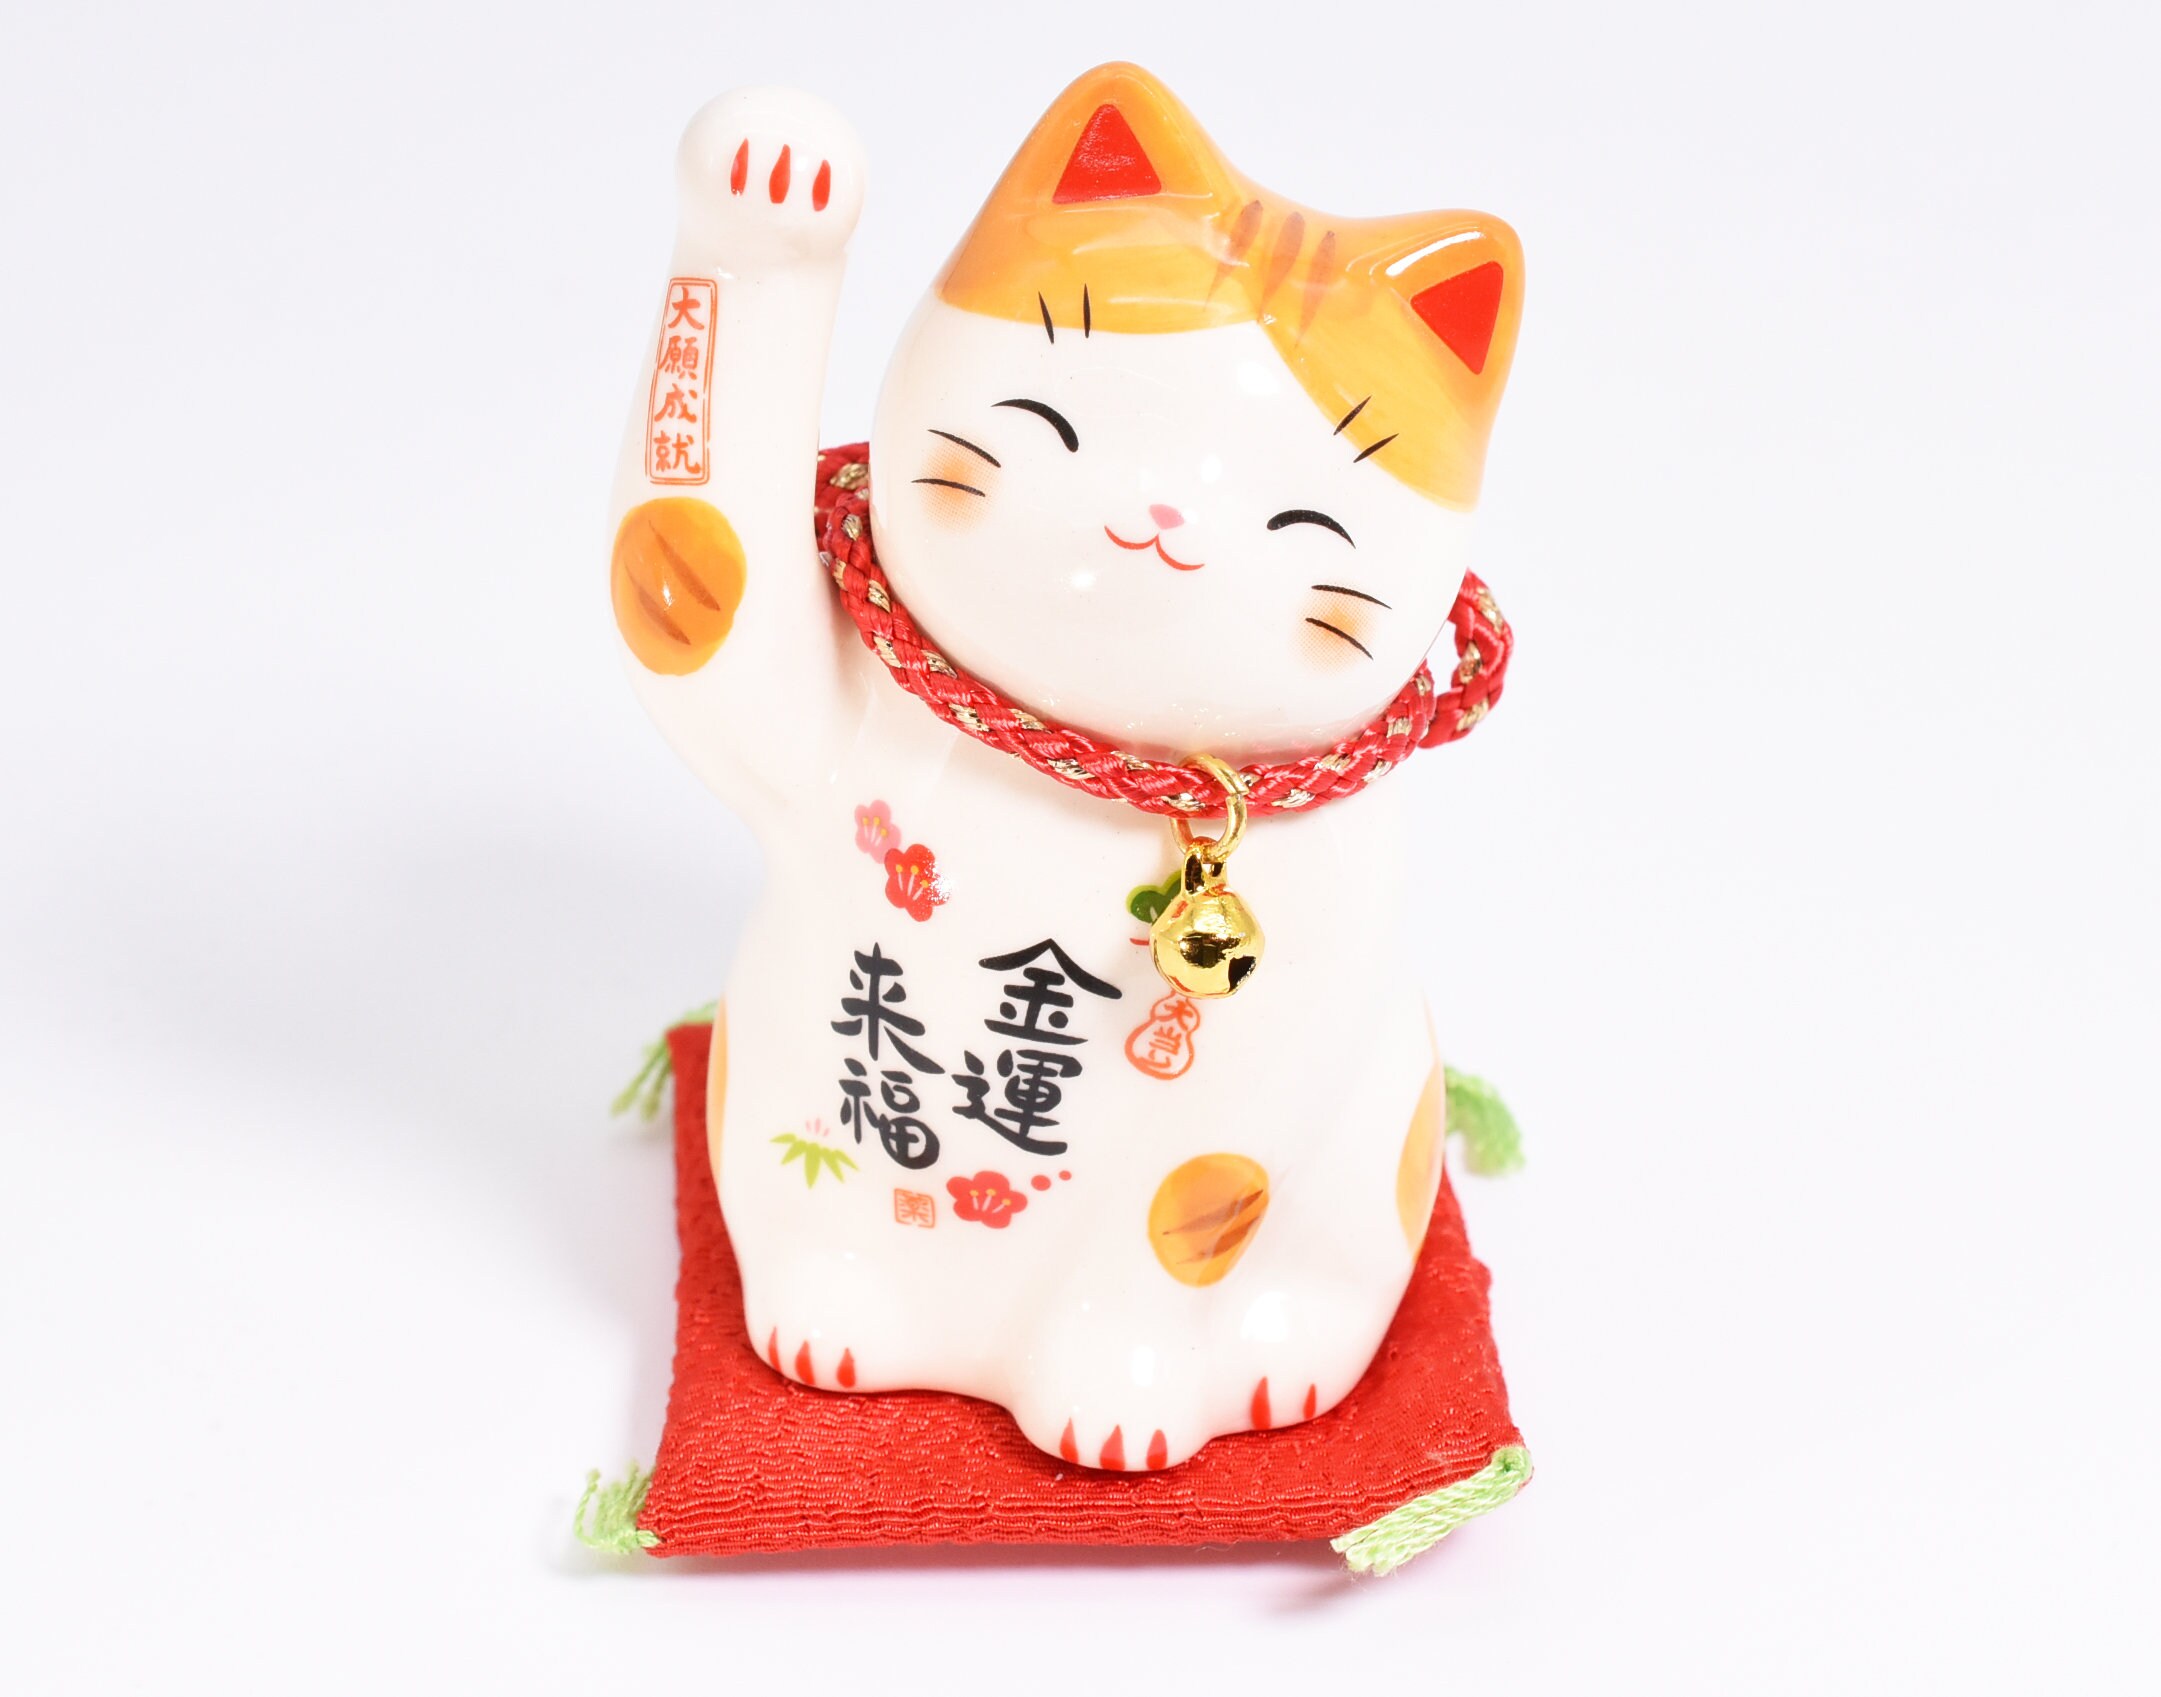 Japanese Luck And Fortune Charm Beckoning White Calico Cat Maneki